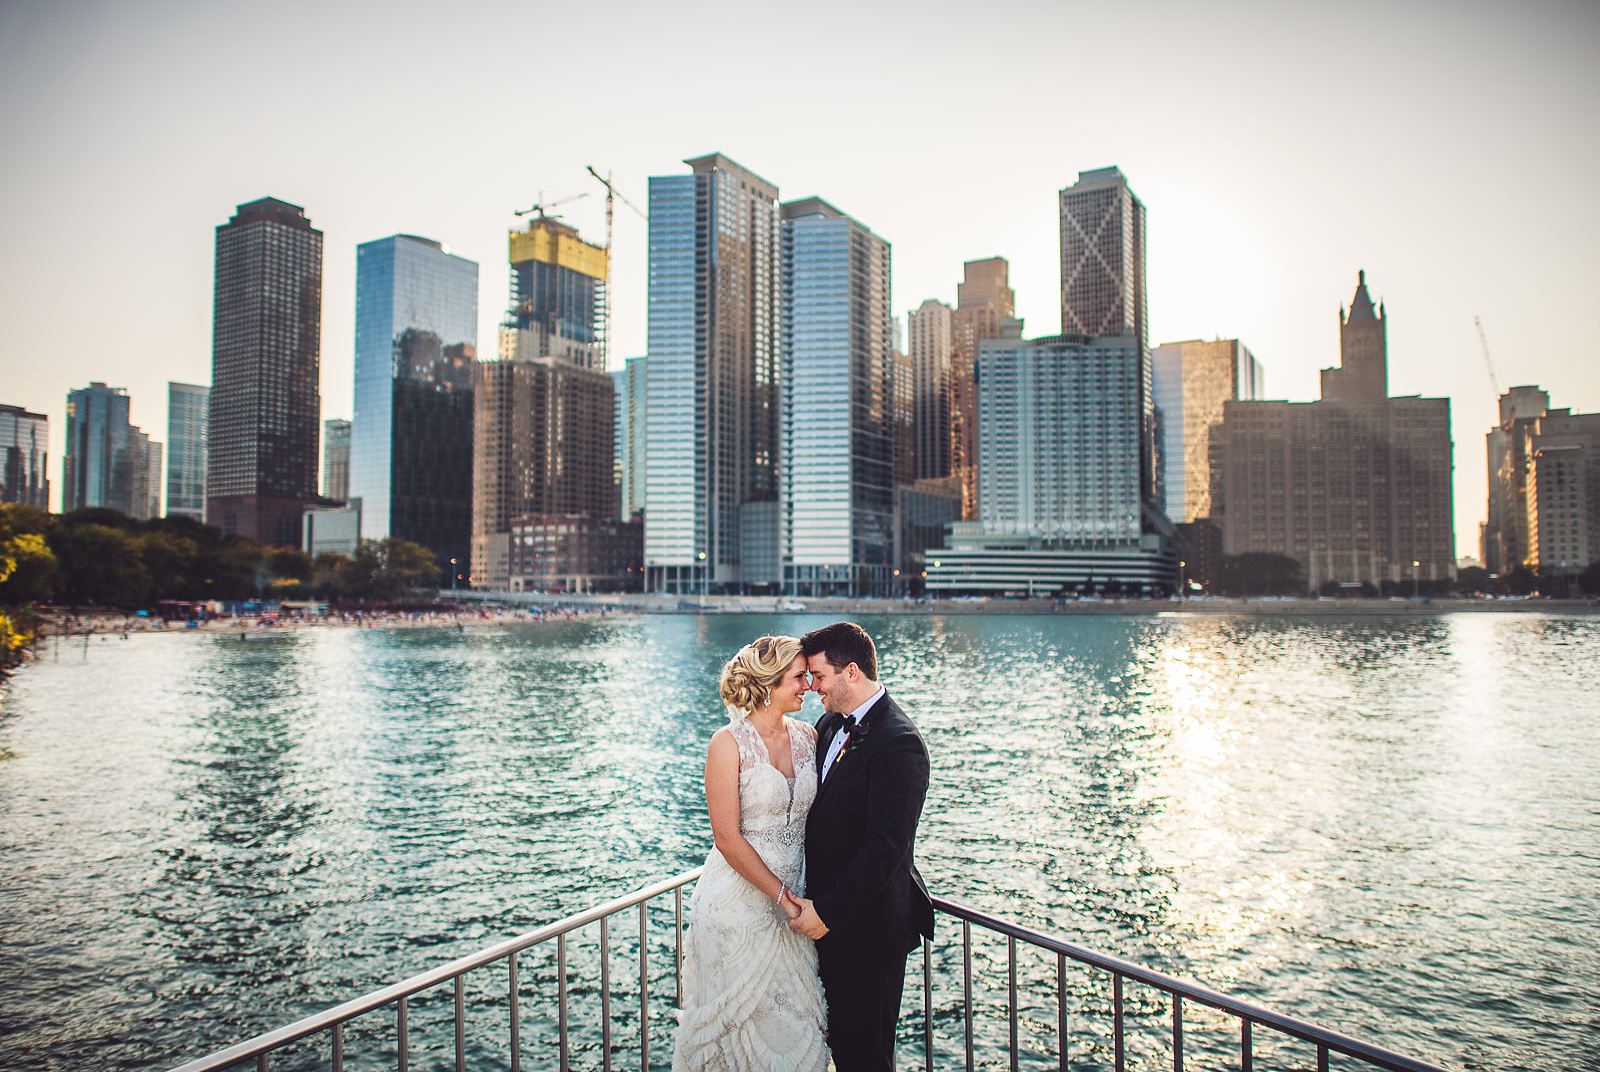 44 olive lee park wedding photography - Chicago Drake Hotel Wedding // Corie + Jordan